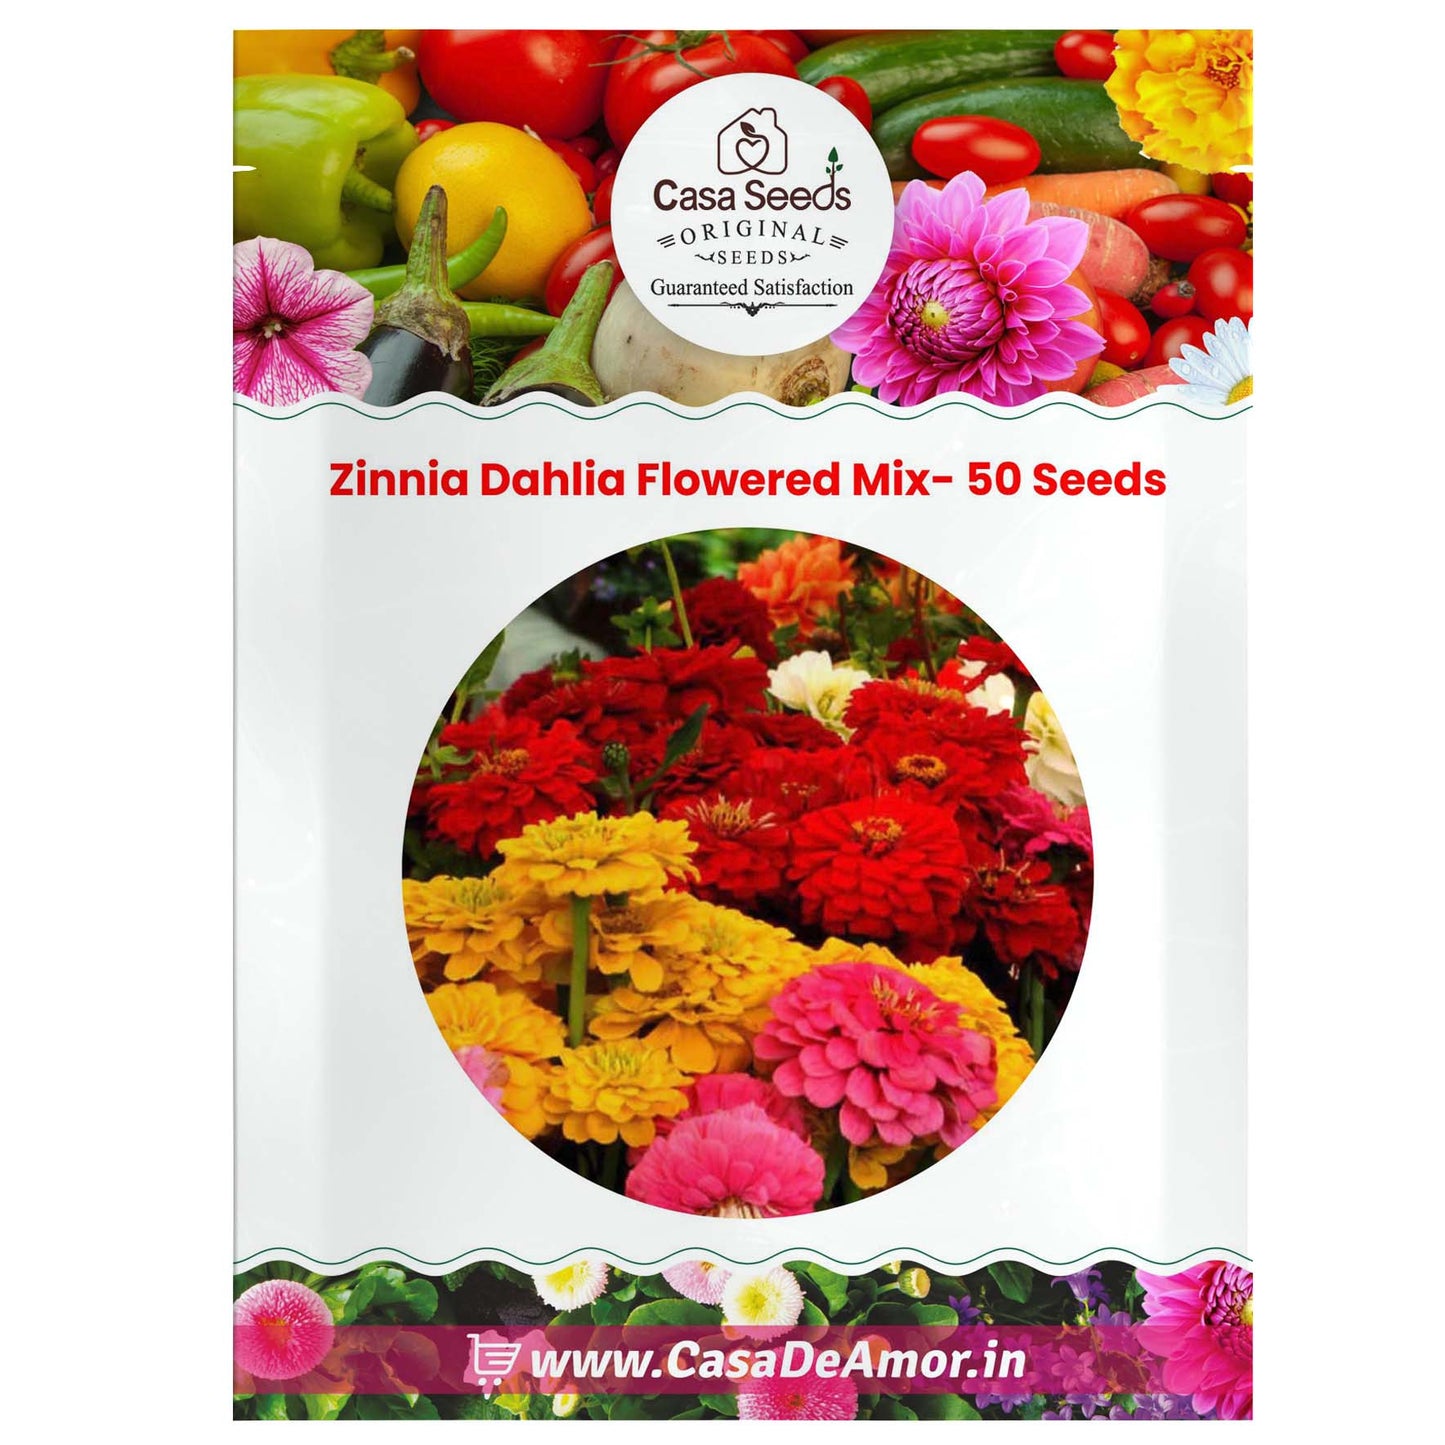 Zinnia Dahlia Flowered Mix- 50 Seeds